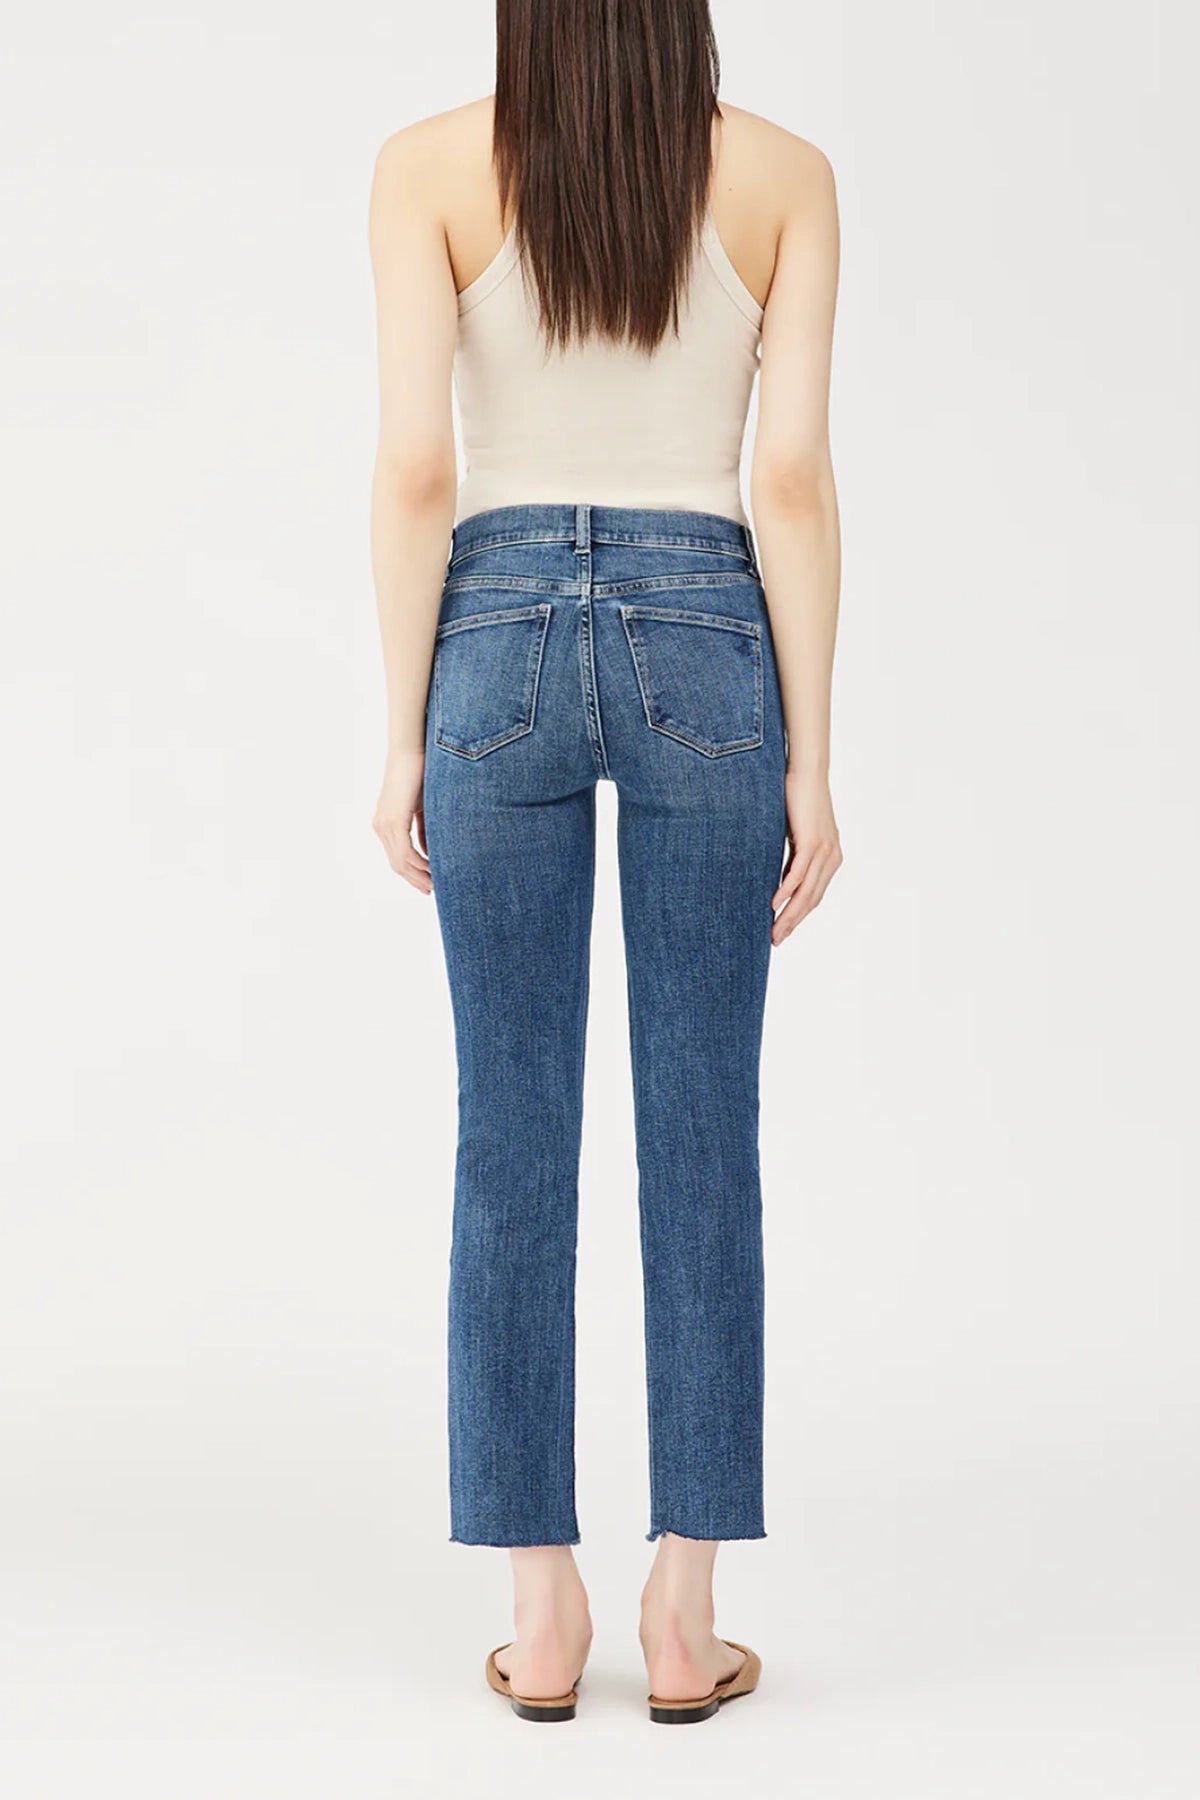 DL1961 Mara Straight Jeans